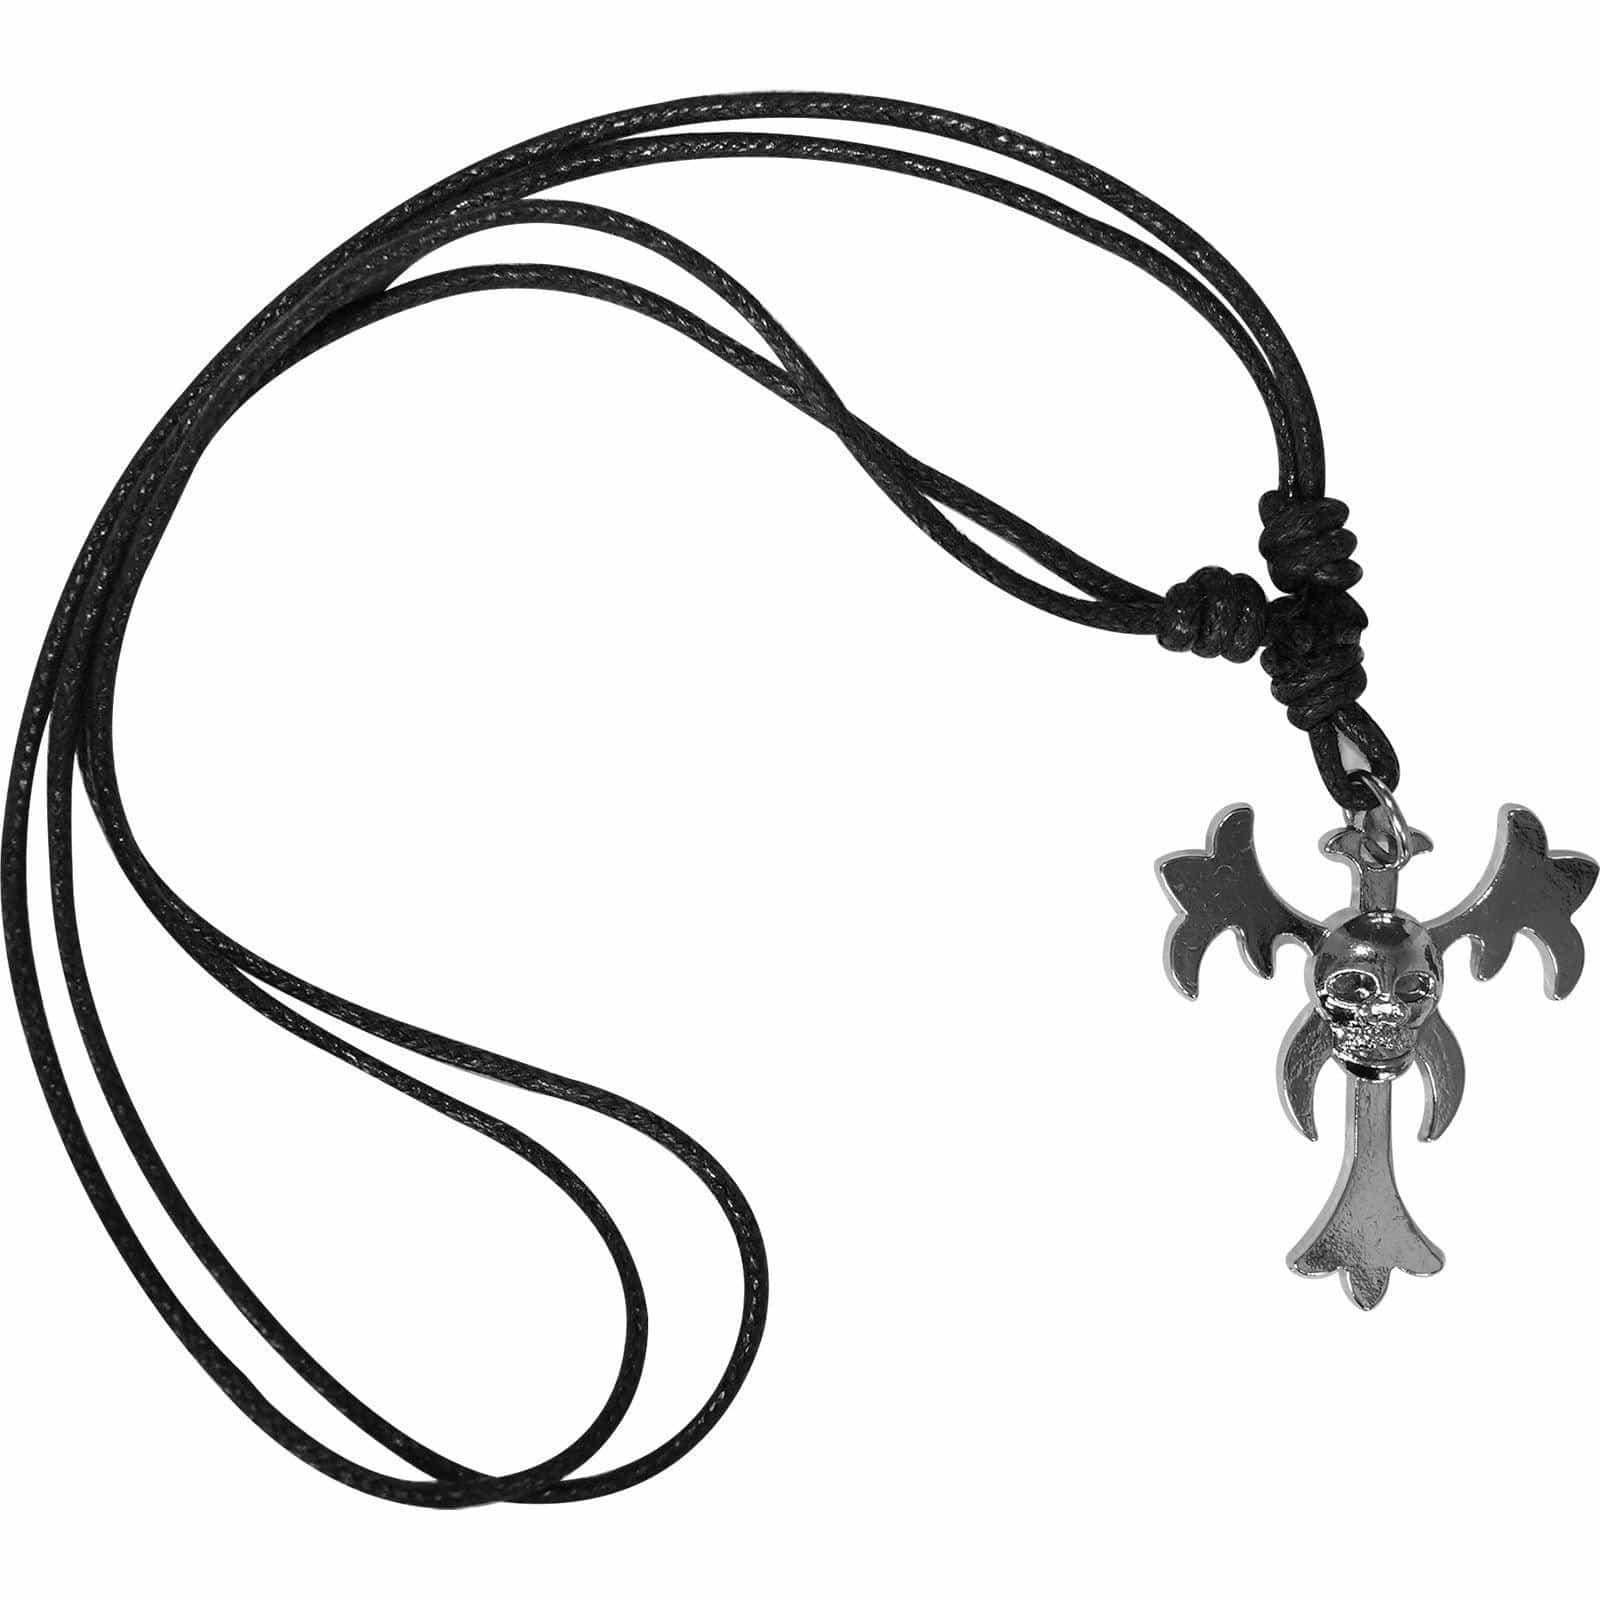 Silver Metal Skull Cross Pendant Chain Necklace Mens Womens Boys Girls Jewellery